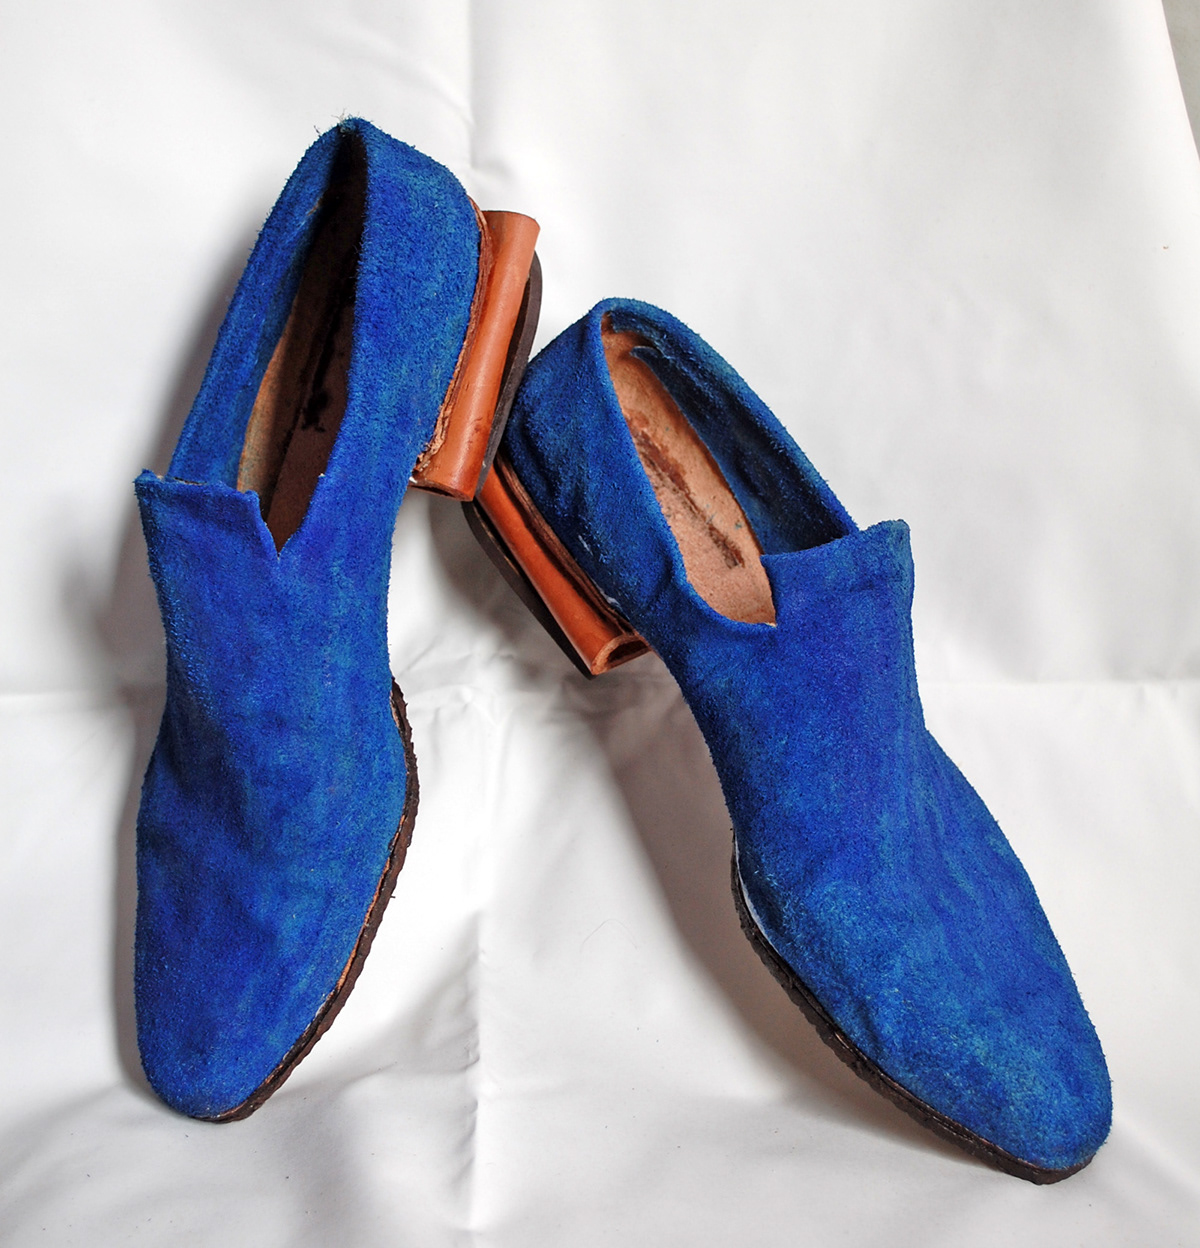 dressshoes fashion shoes footwear shoe design avantgarde blue suede shoes red boots vegtan leather disegni scarpe shoe designer